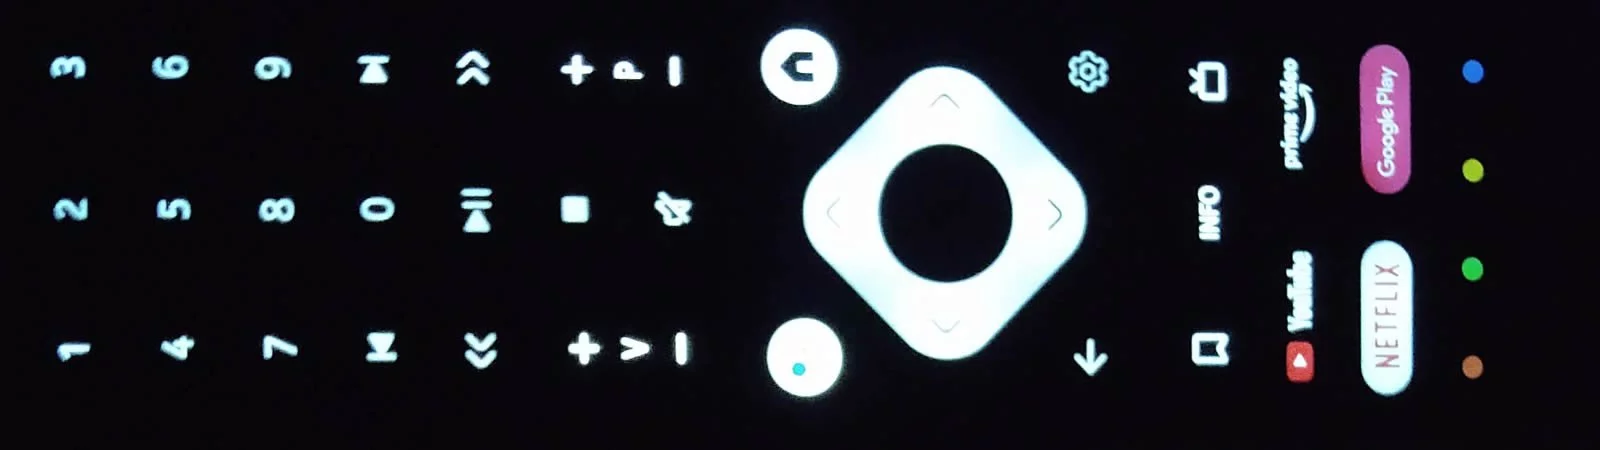 Nokia Streaming Box 8000 Fjernbetjening lys